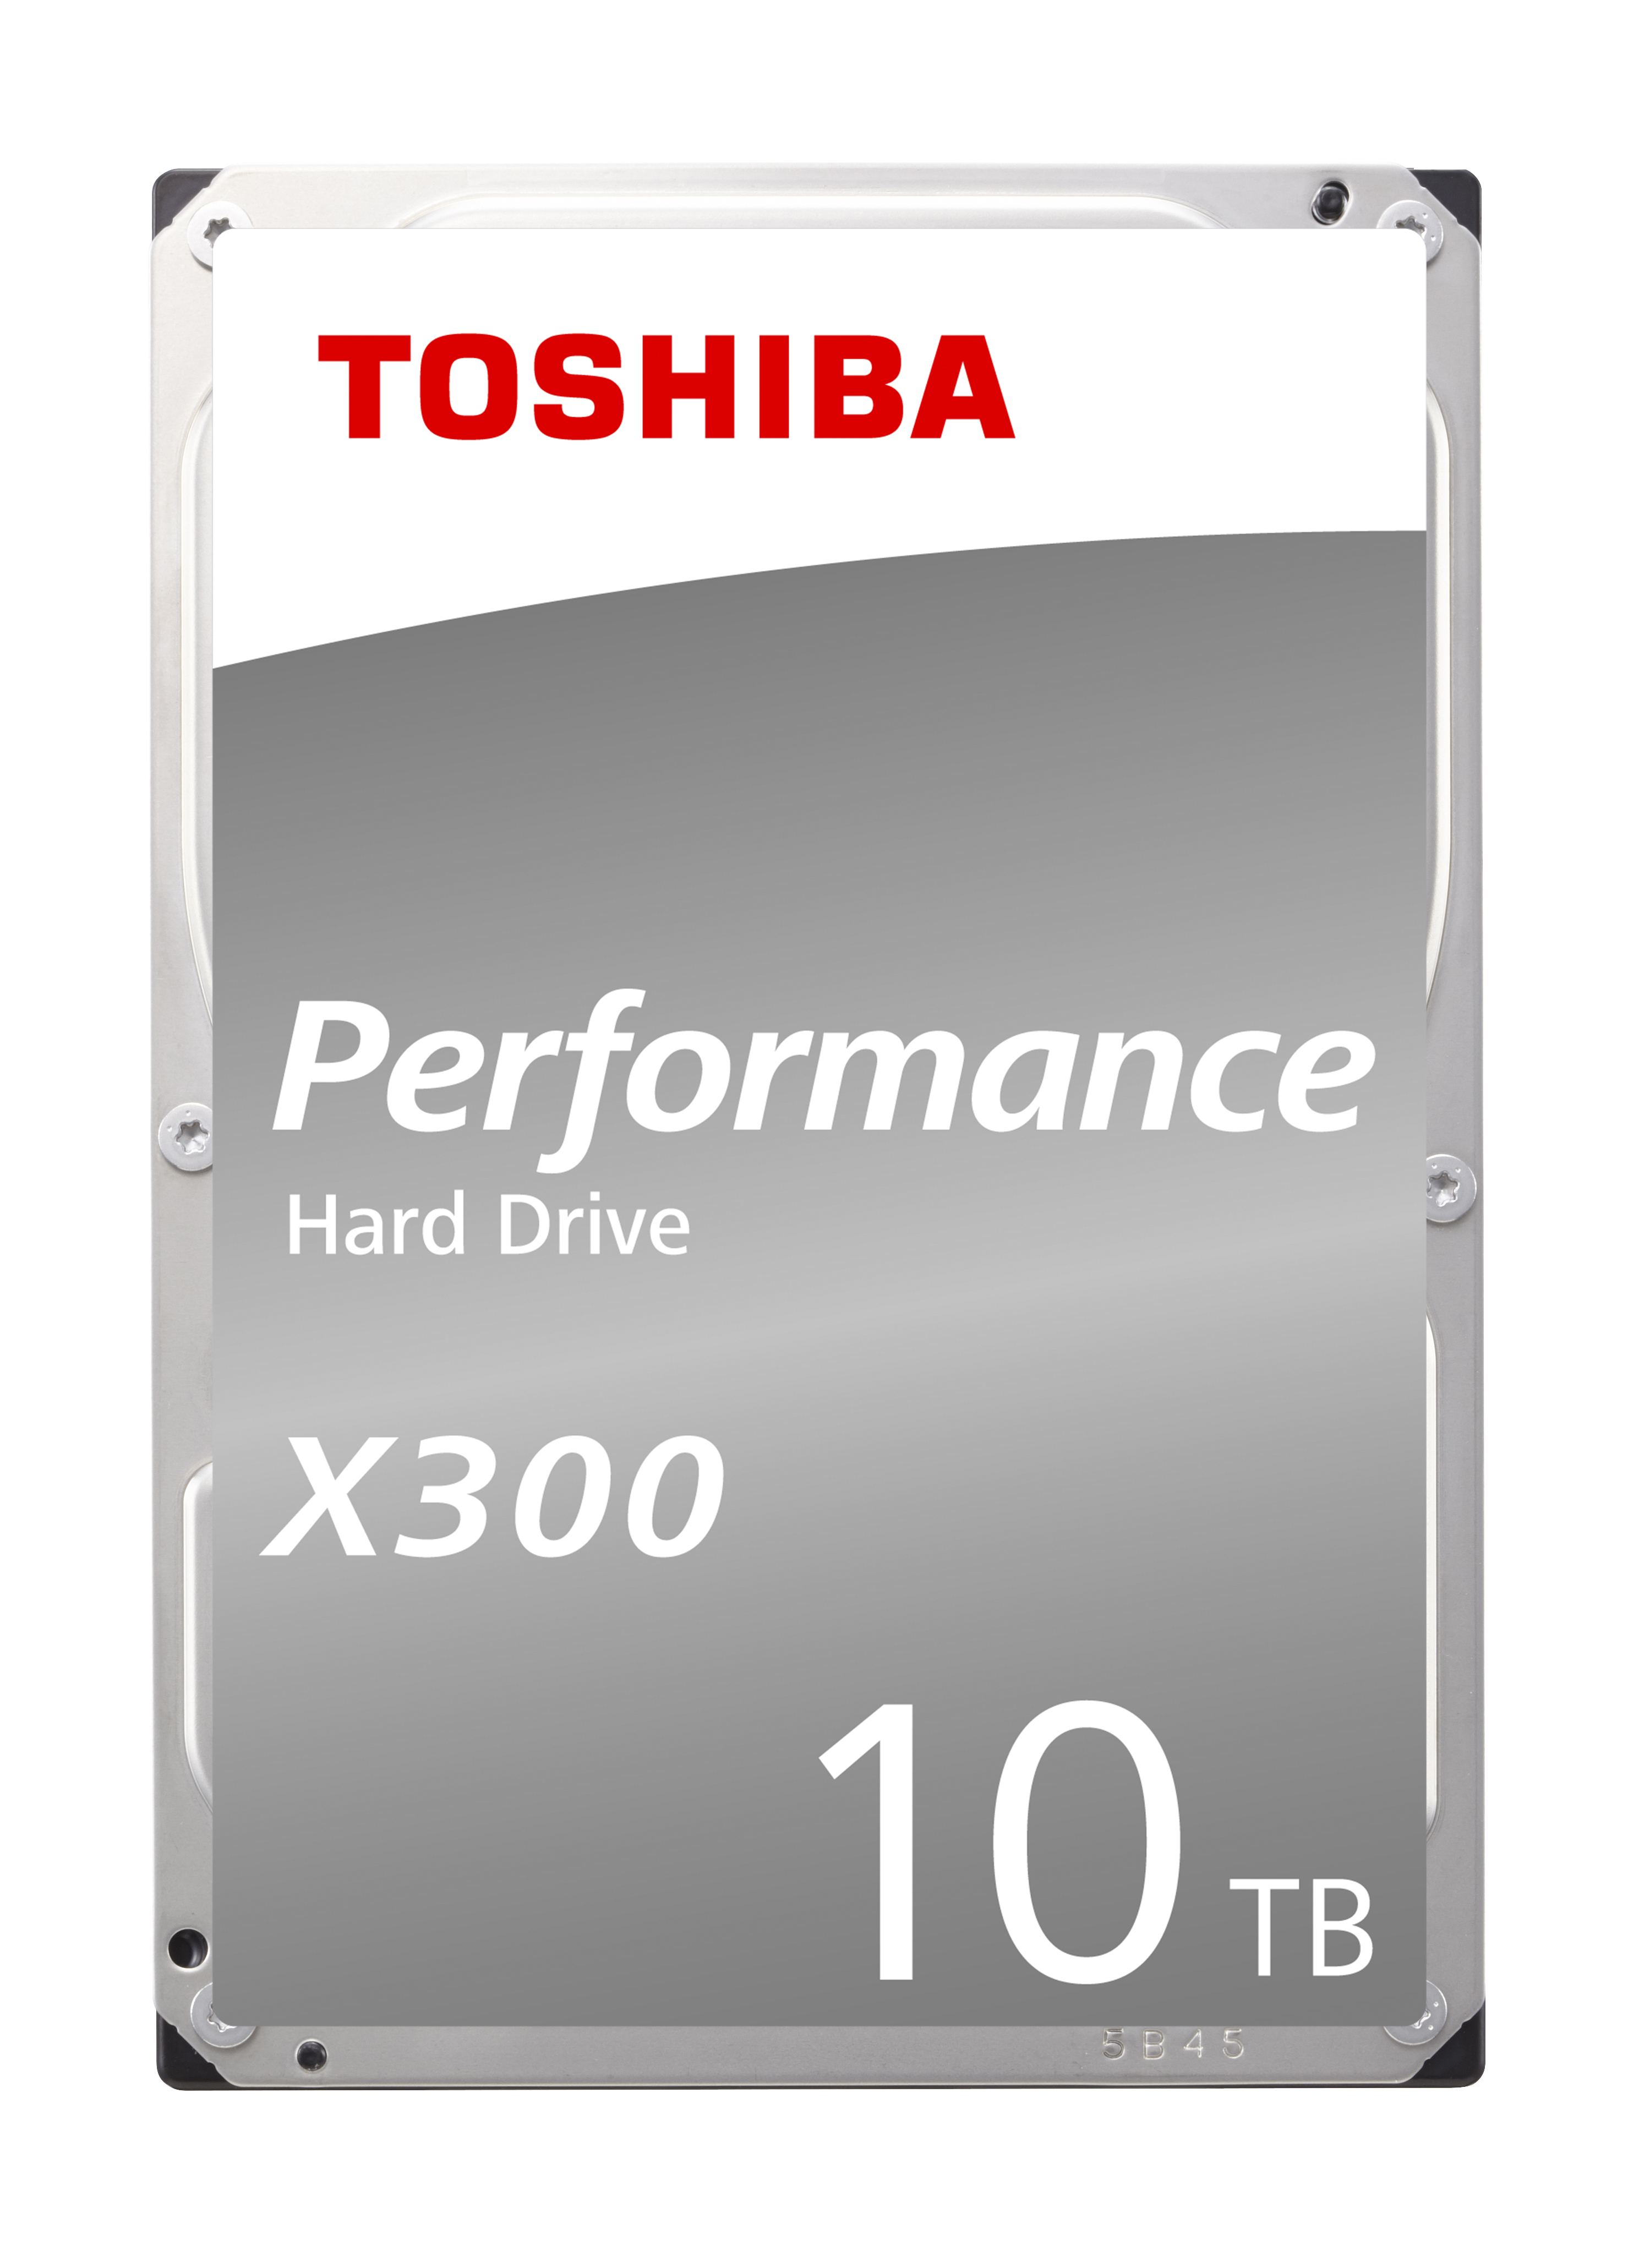 Toshiba X300 10TB virtual label 01